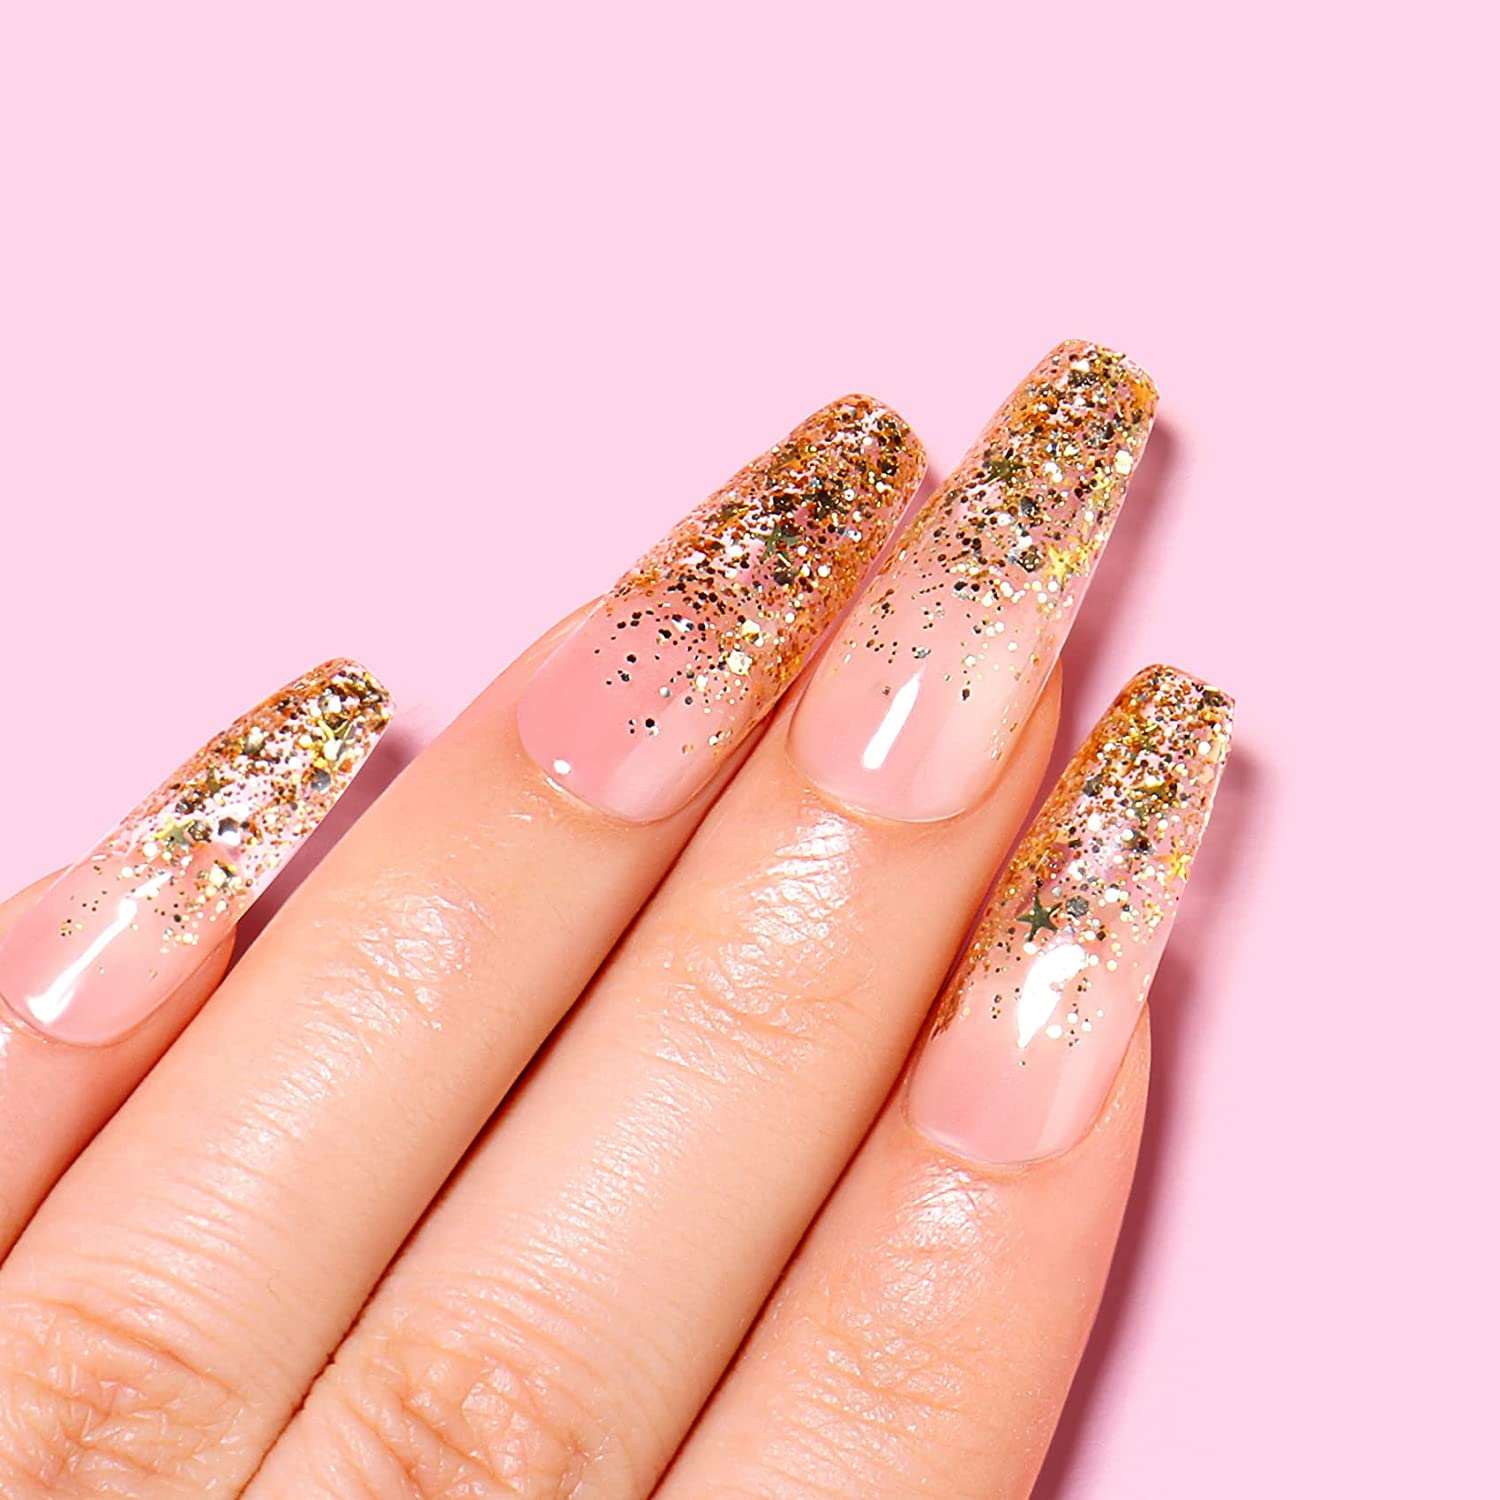 Rose gold glitter Ombre almond nails | Rose gold nails glitter, Nude nails  with glitter, Ombre nails glitter